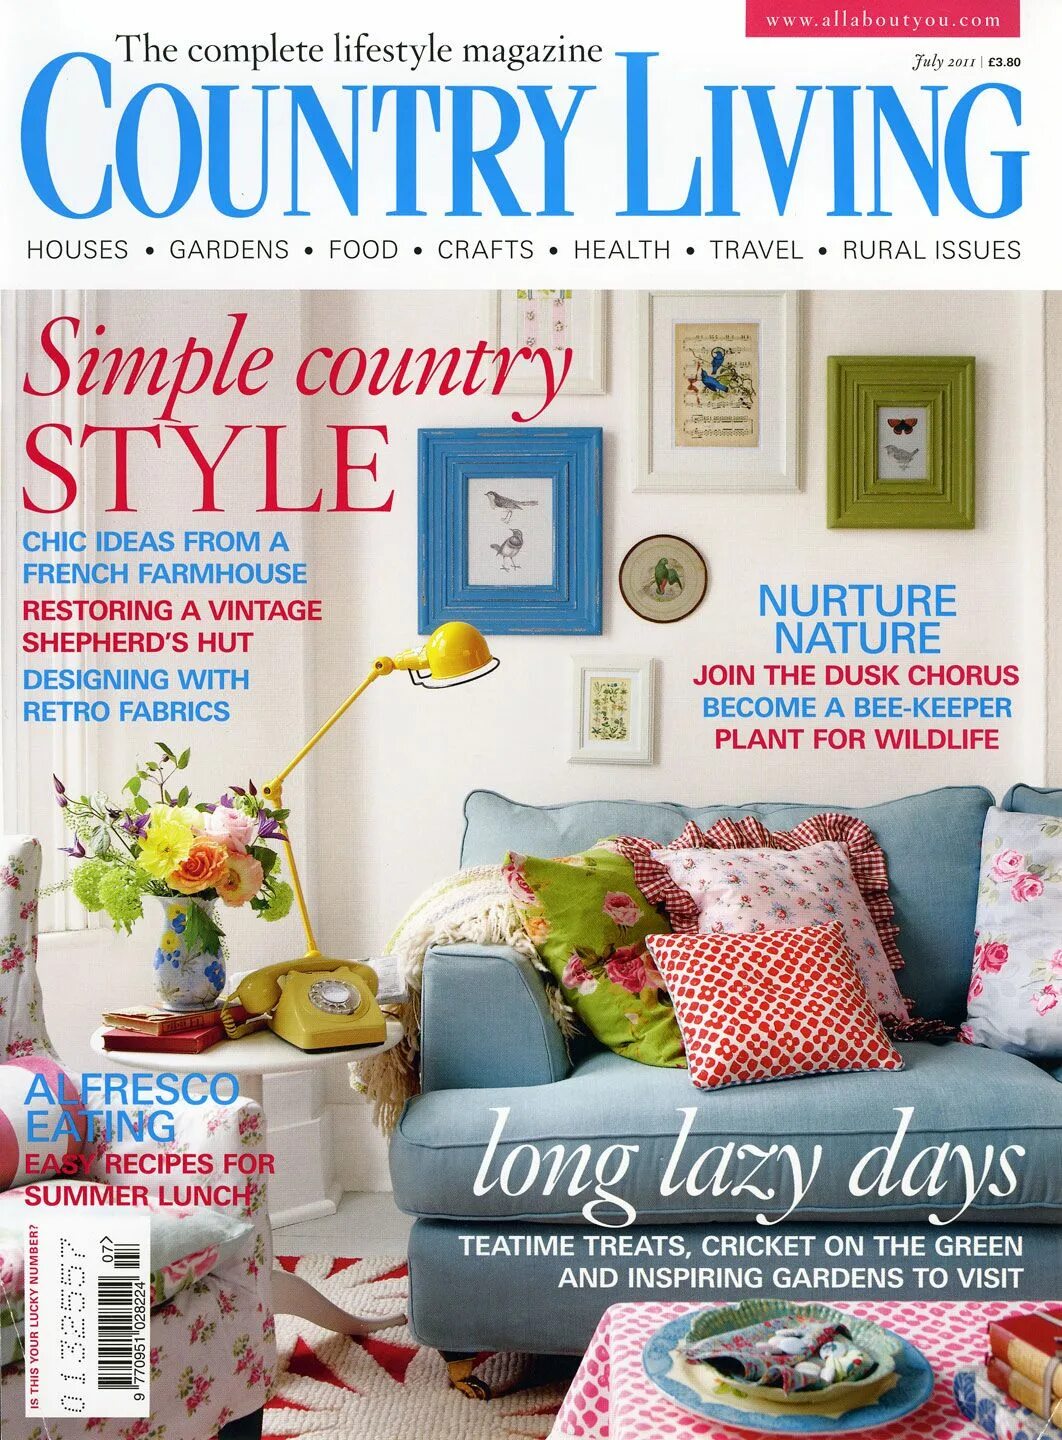 Living magazine. Country Living Magazine. Журнал Кантри. Country Home Magazine. Country Living Magazine uk.